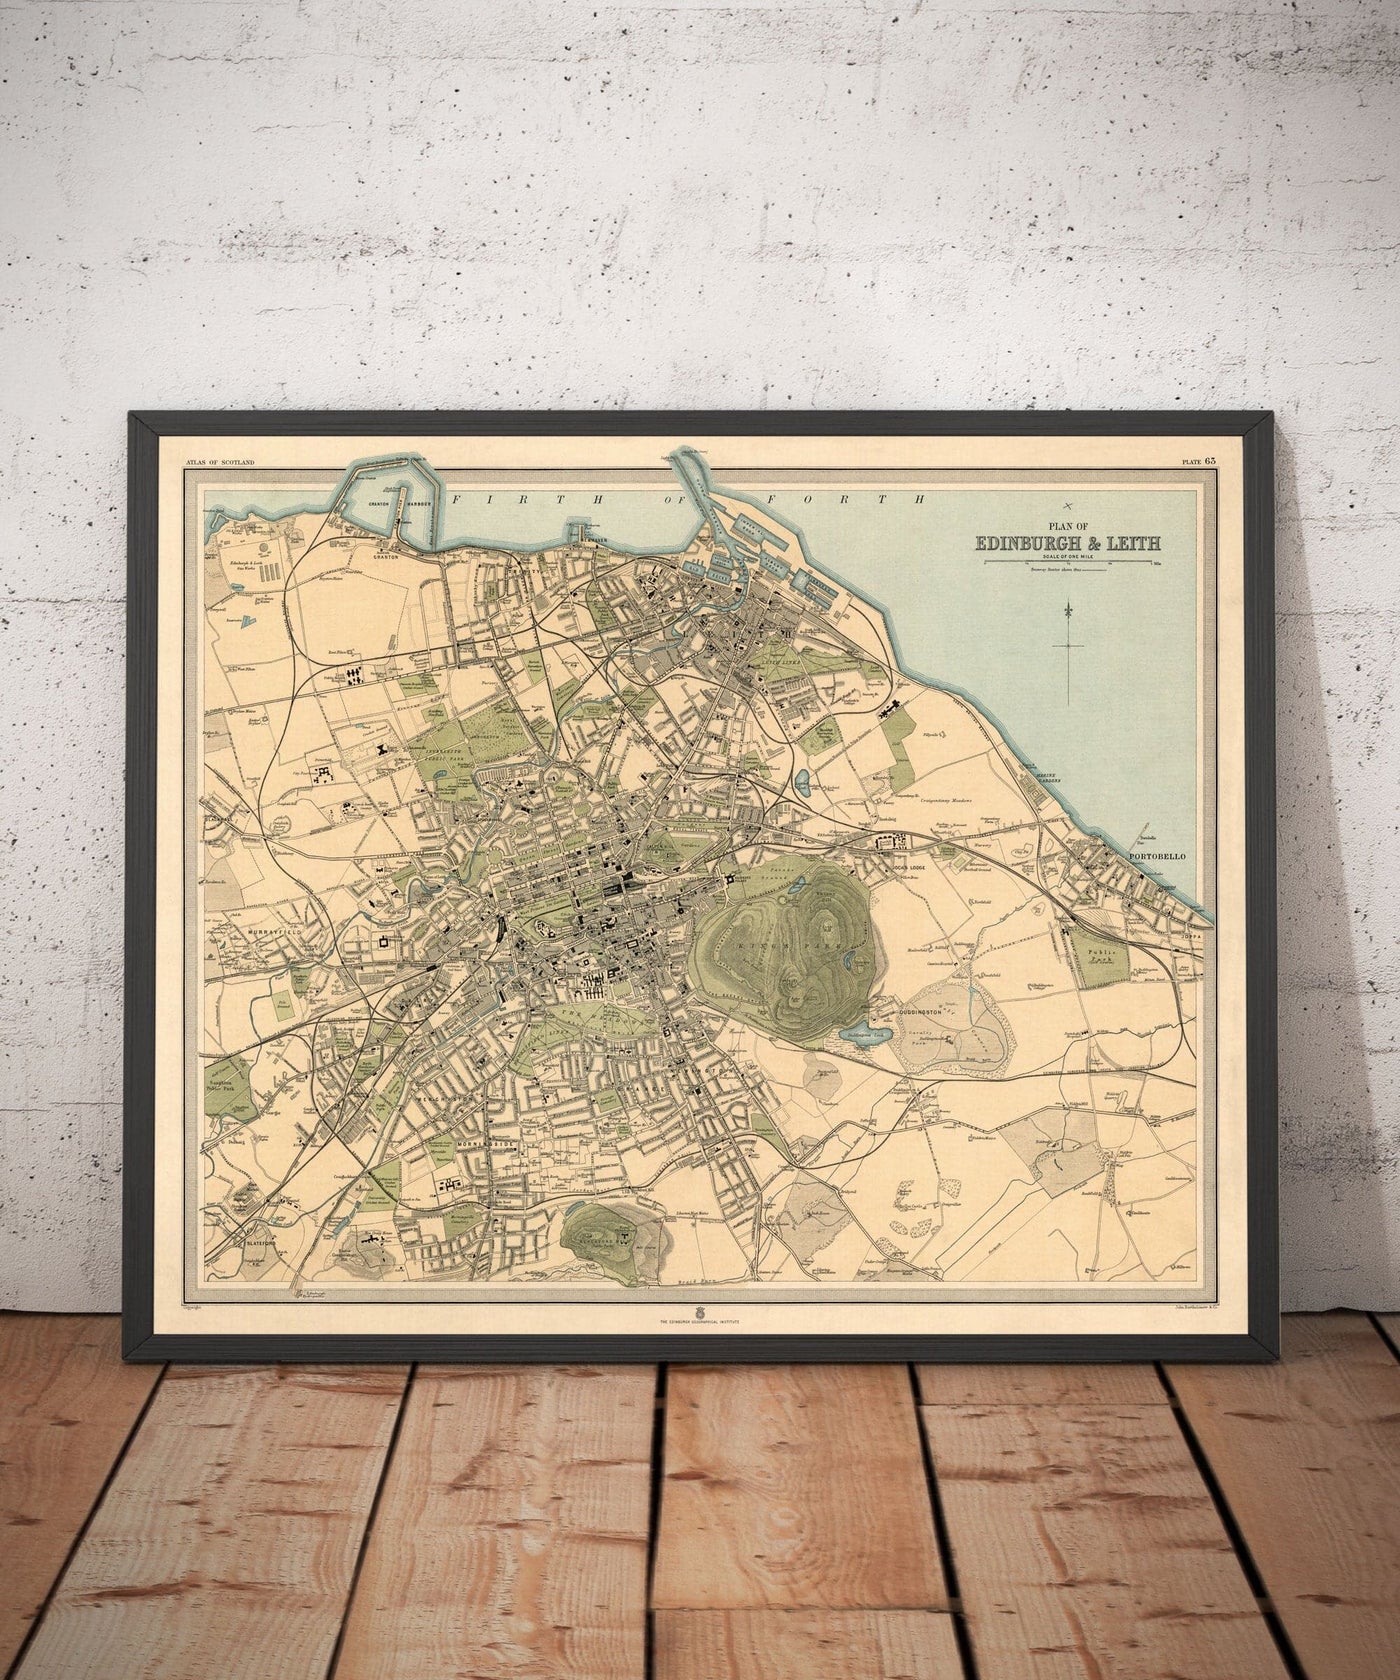 Old Map of Edinburgh in 1912 by J Bartholomew - Leith, Murrayfield, Portobello, Holyrood